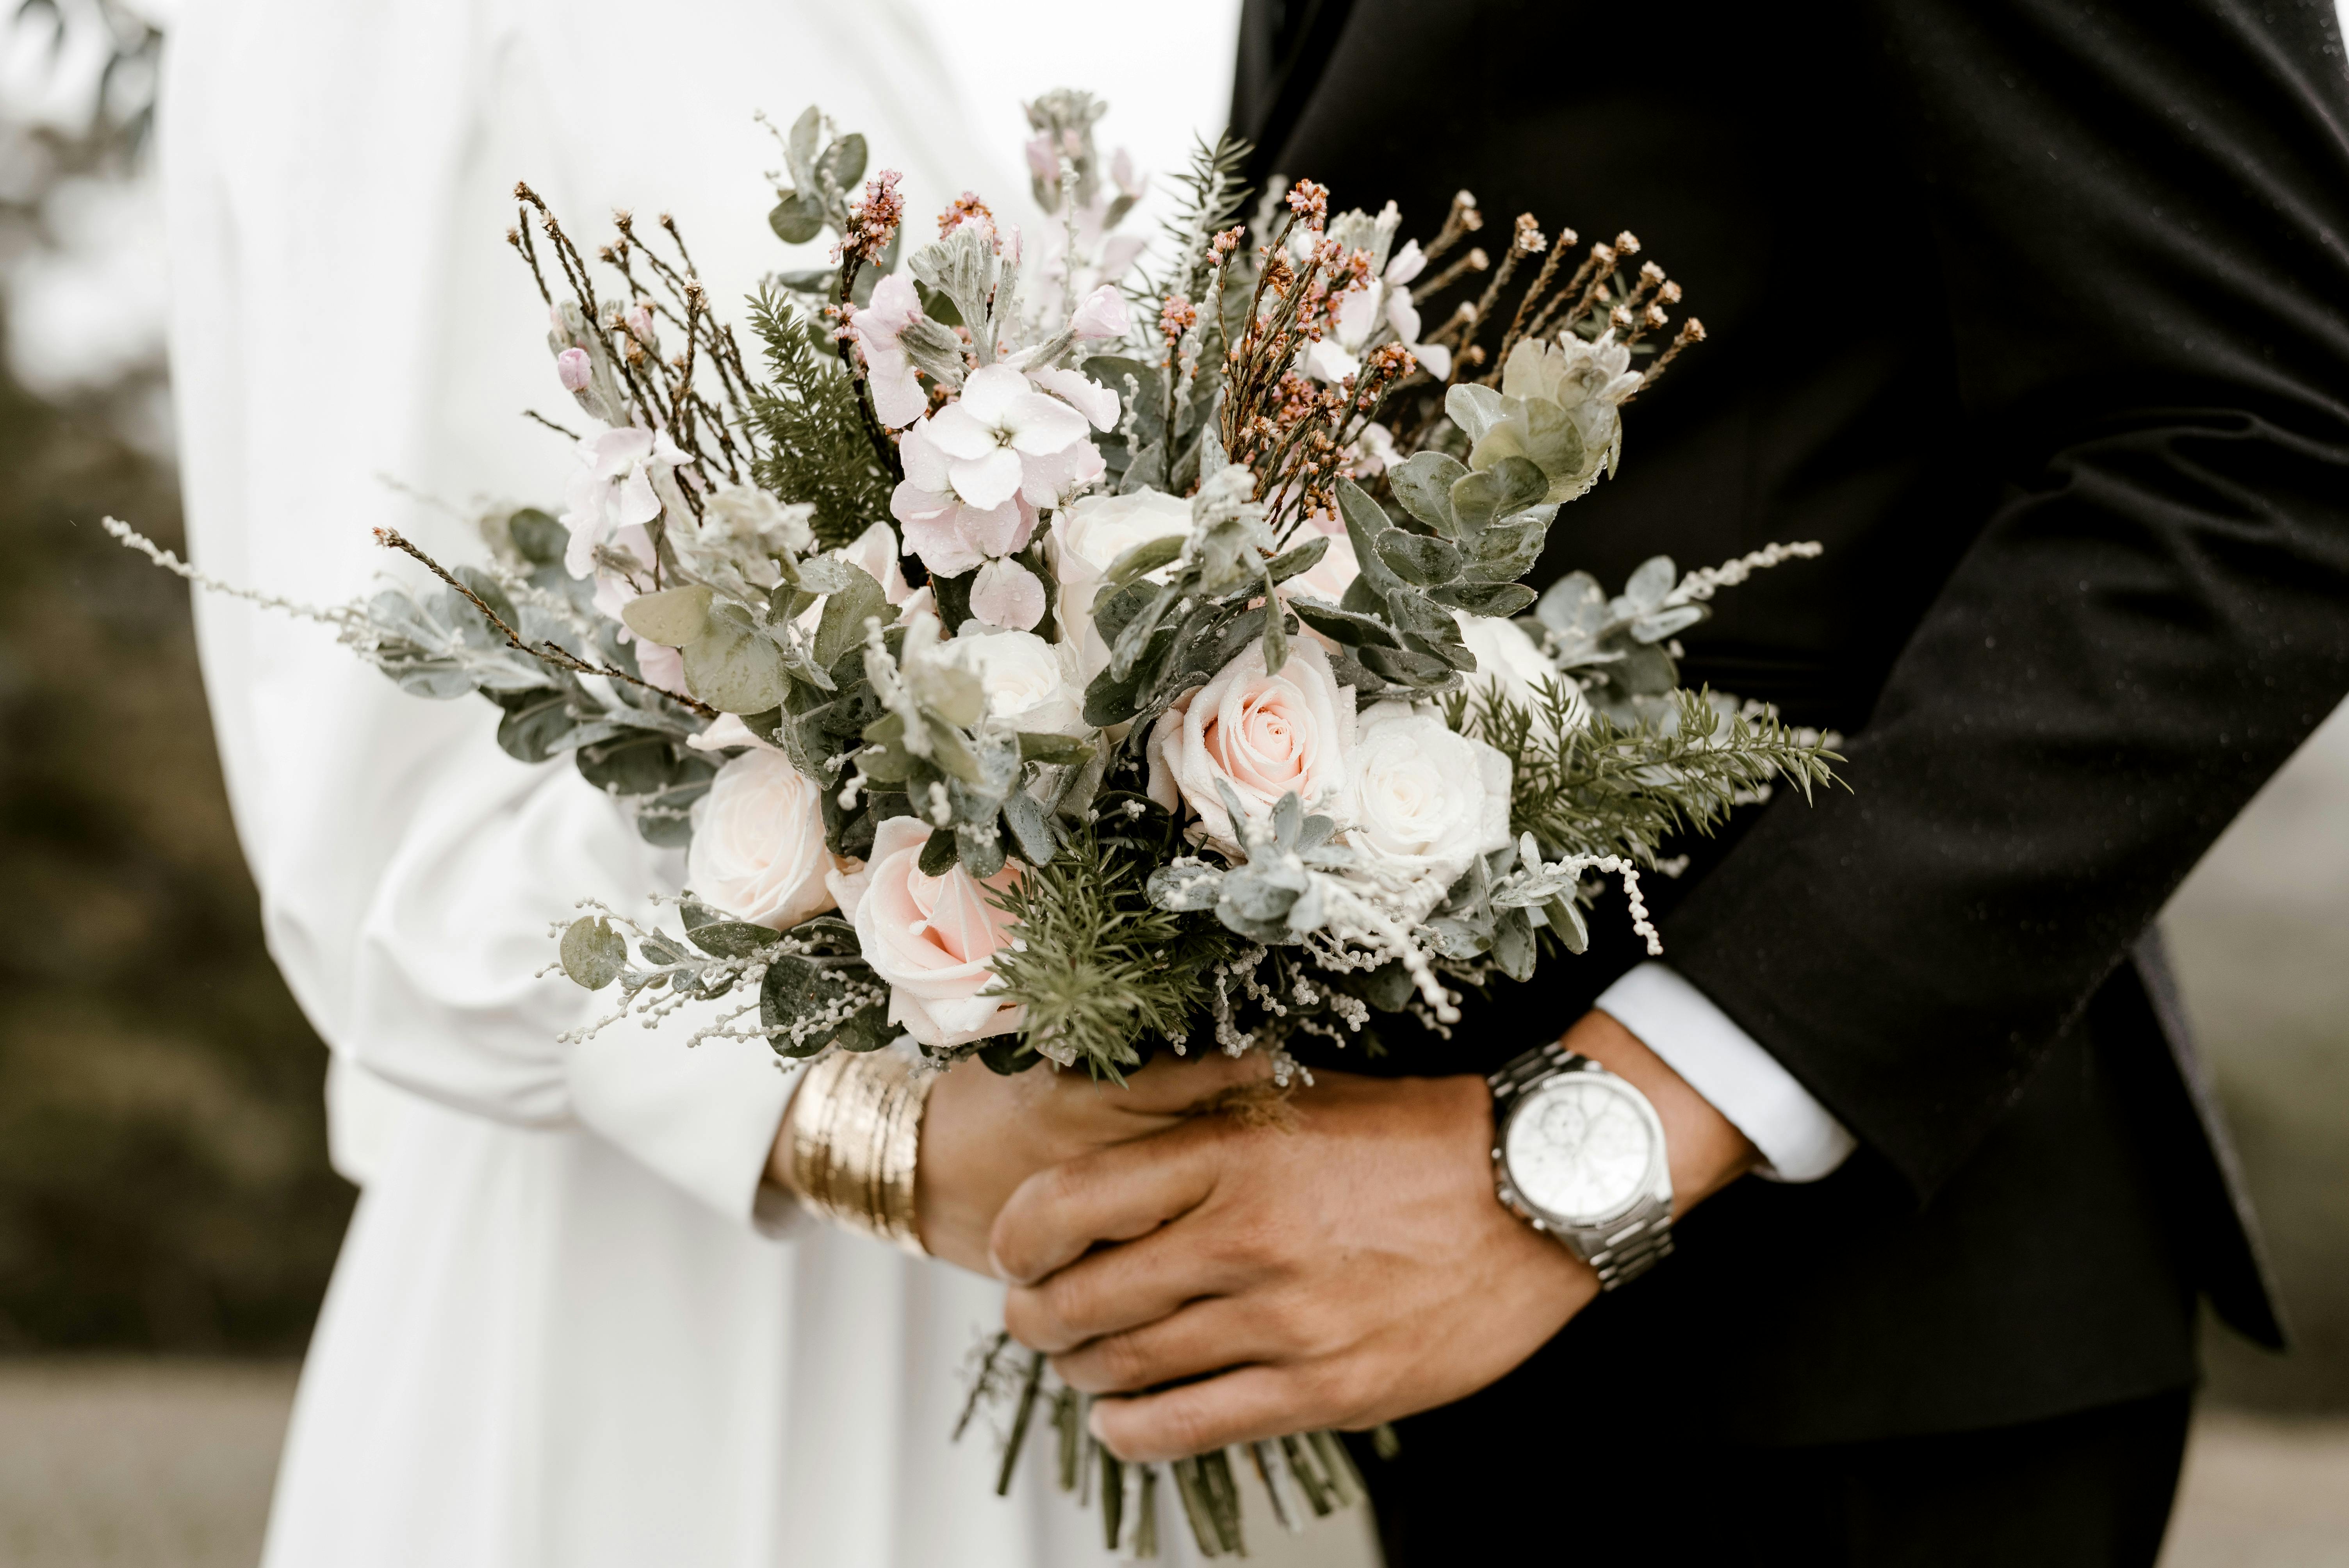 Wedding Background Flower Images  Free Download on Freepik